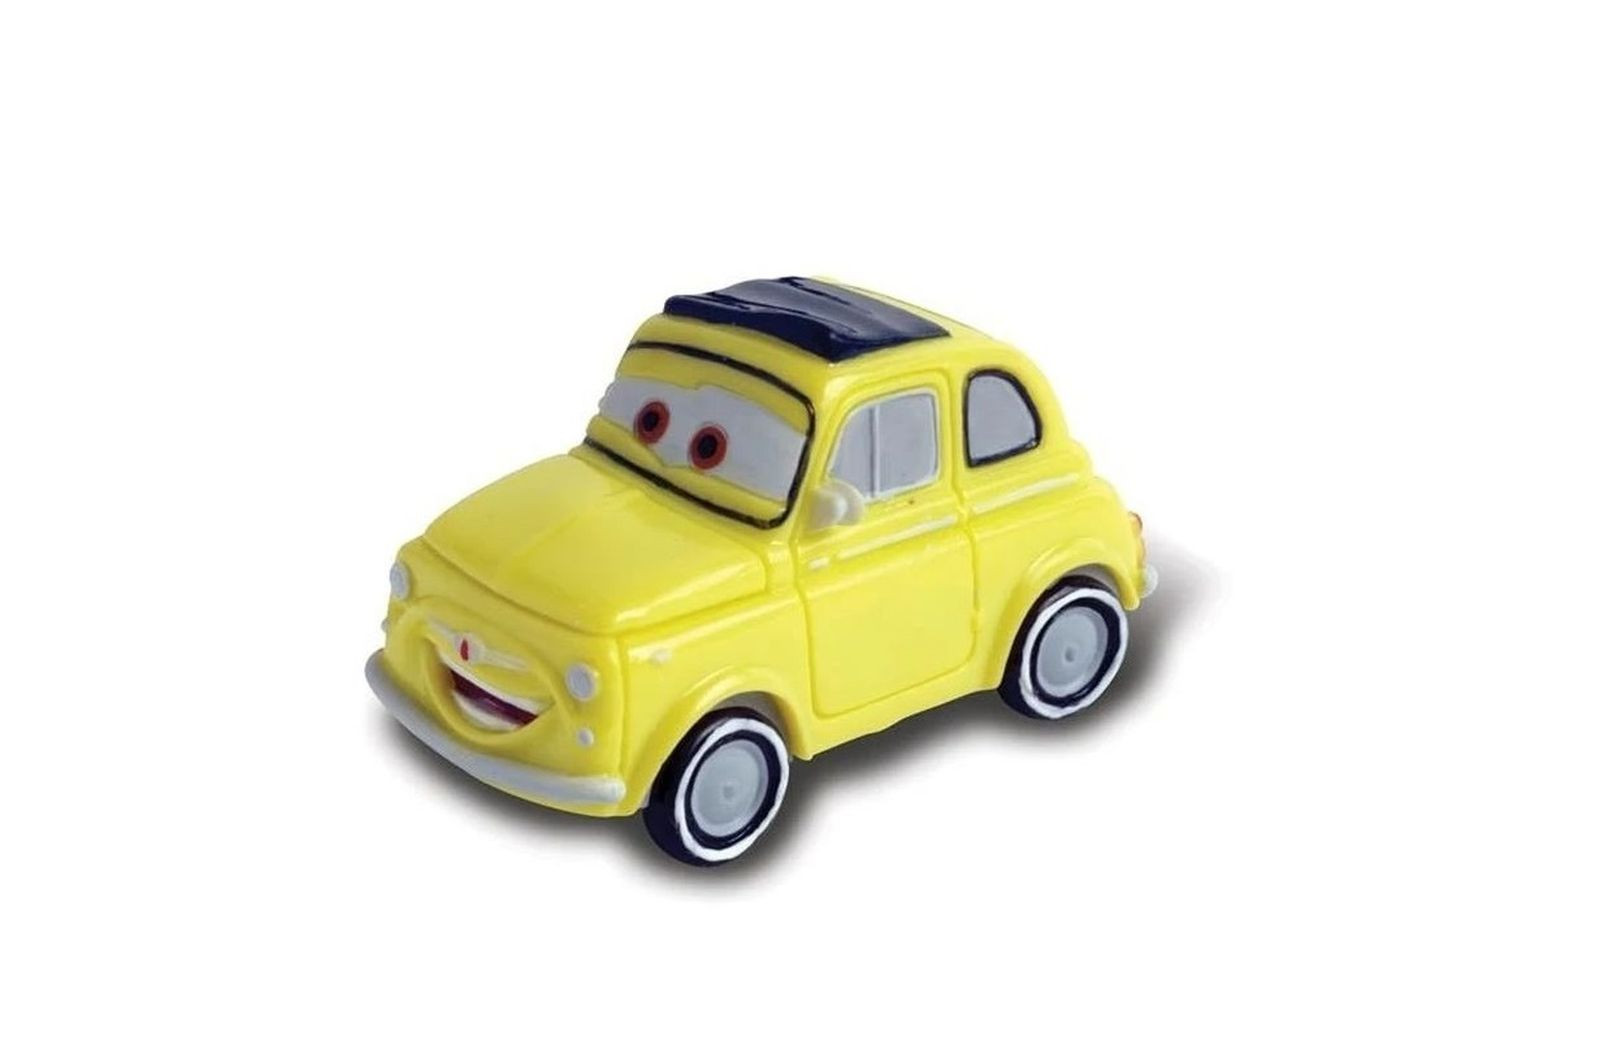 Figurines Voitures Cars Disney Pixar Bully Flash McQueen Martin Guido The  King Luigi Ambulance - Figurines/Bully et Bullyland - La Boutique Disney